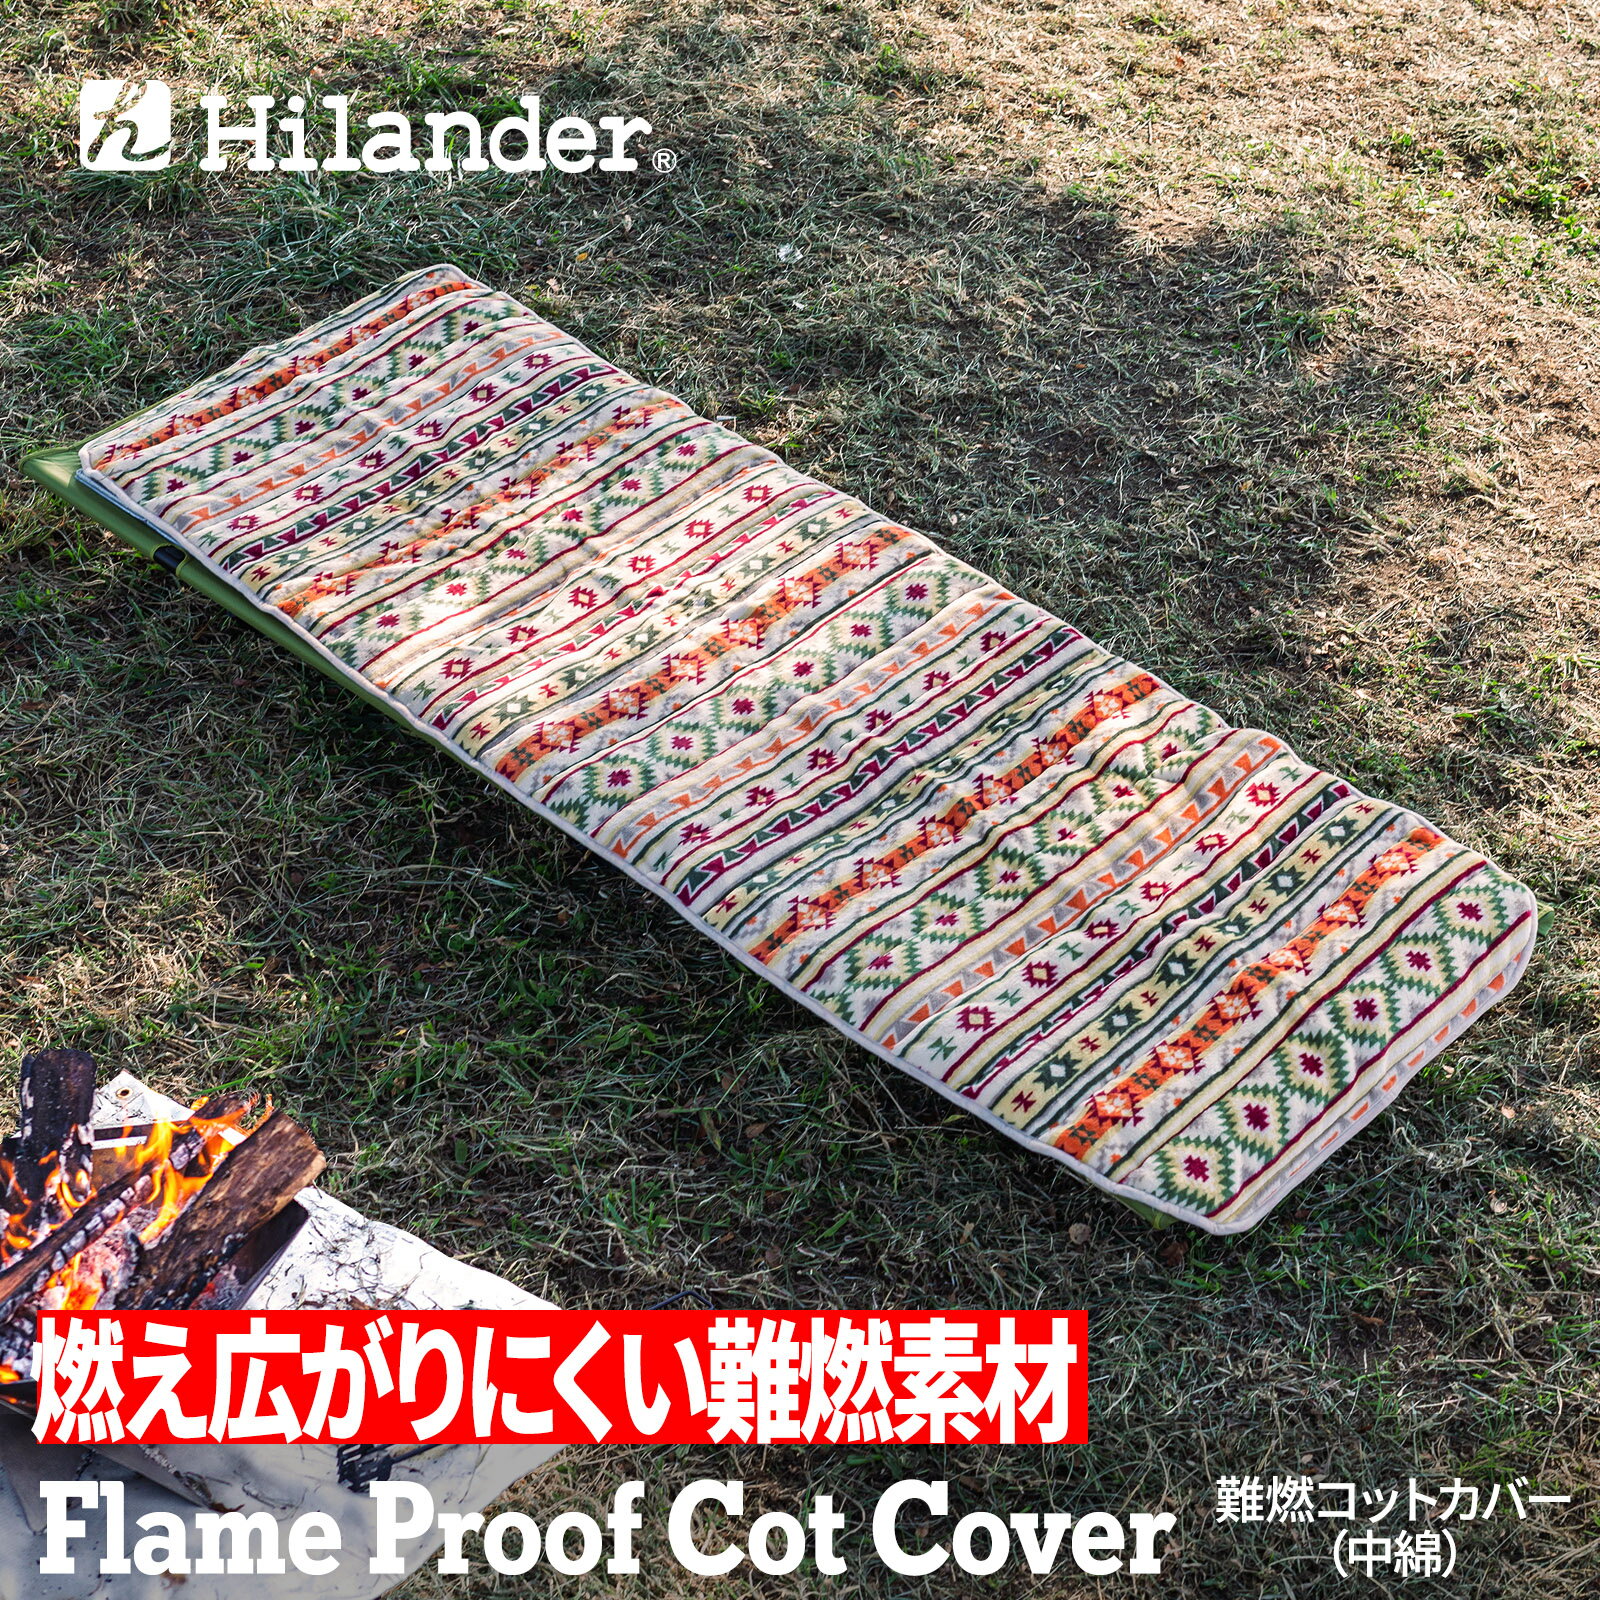 Hilander(ハイランダー) 難燃マット コットカバー 【1年保証】 キリム N-086